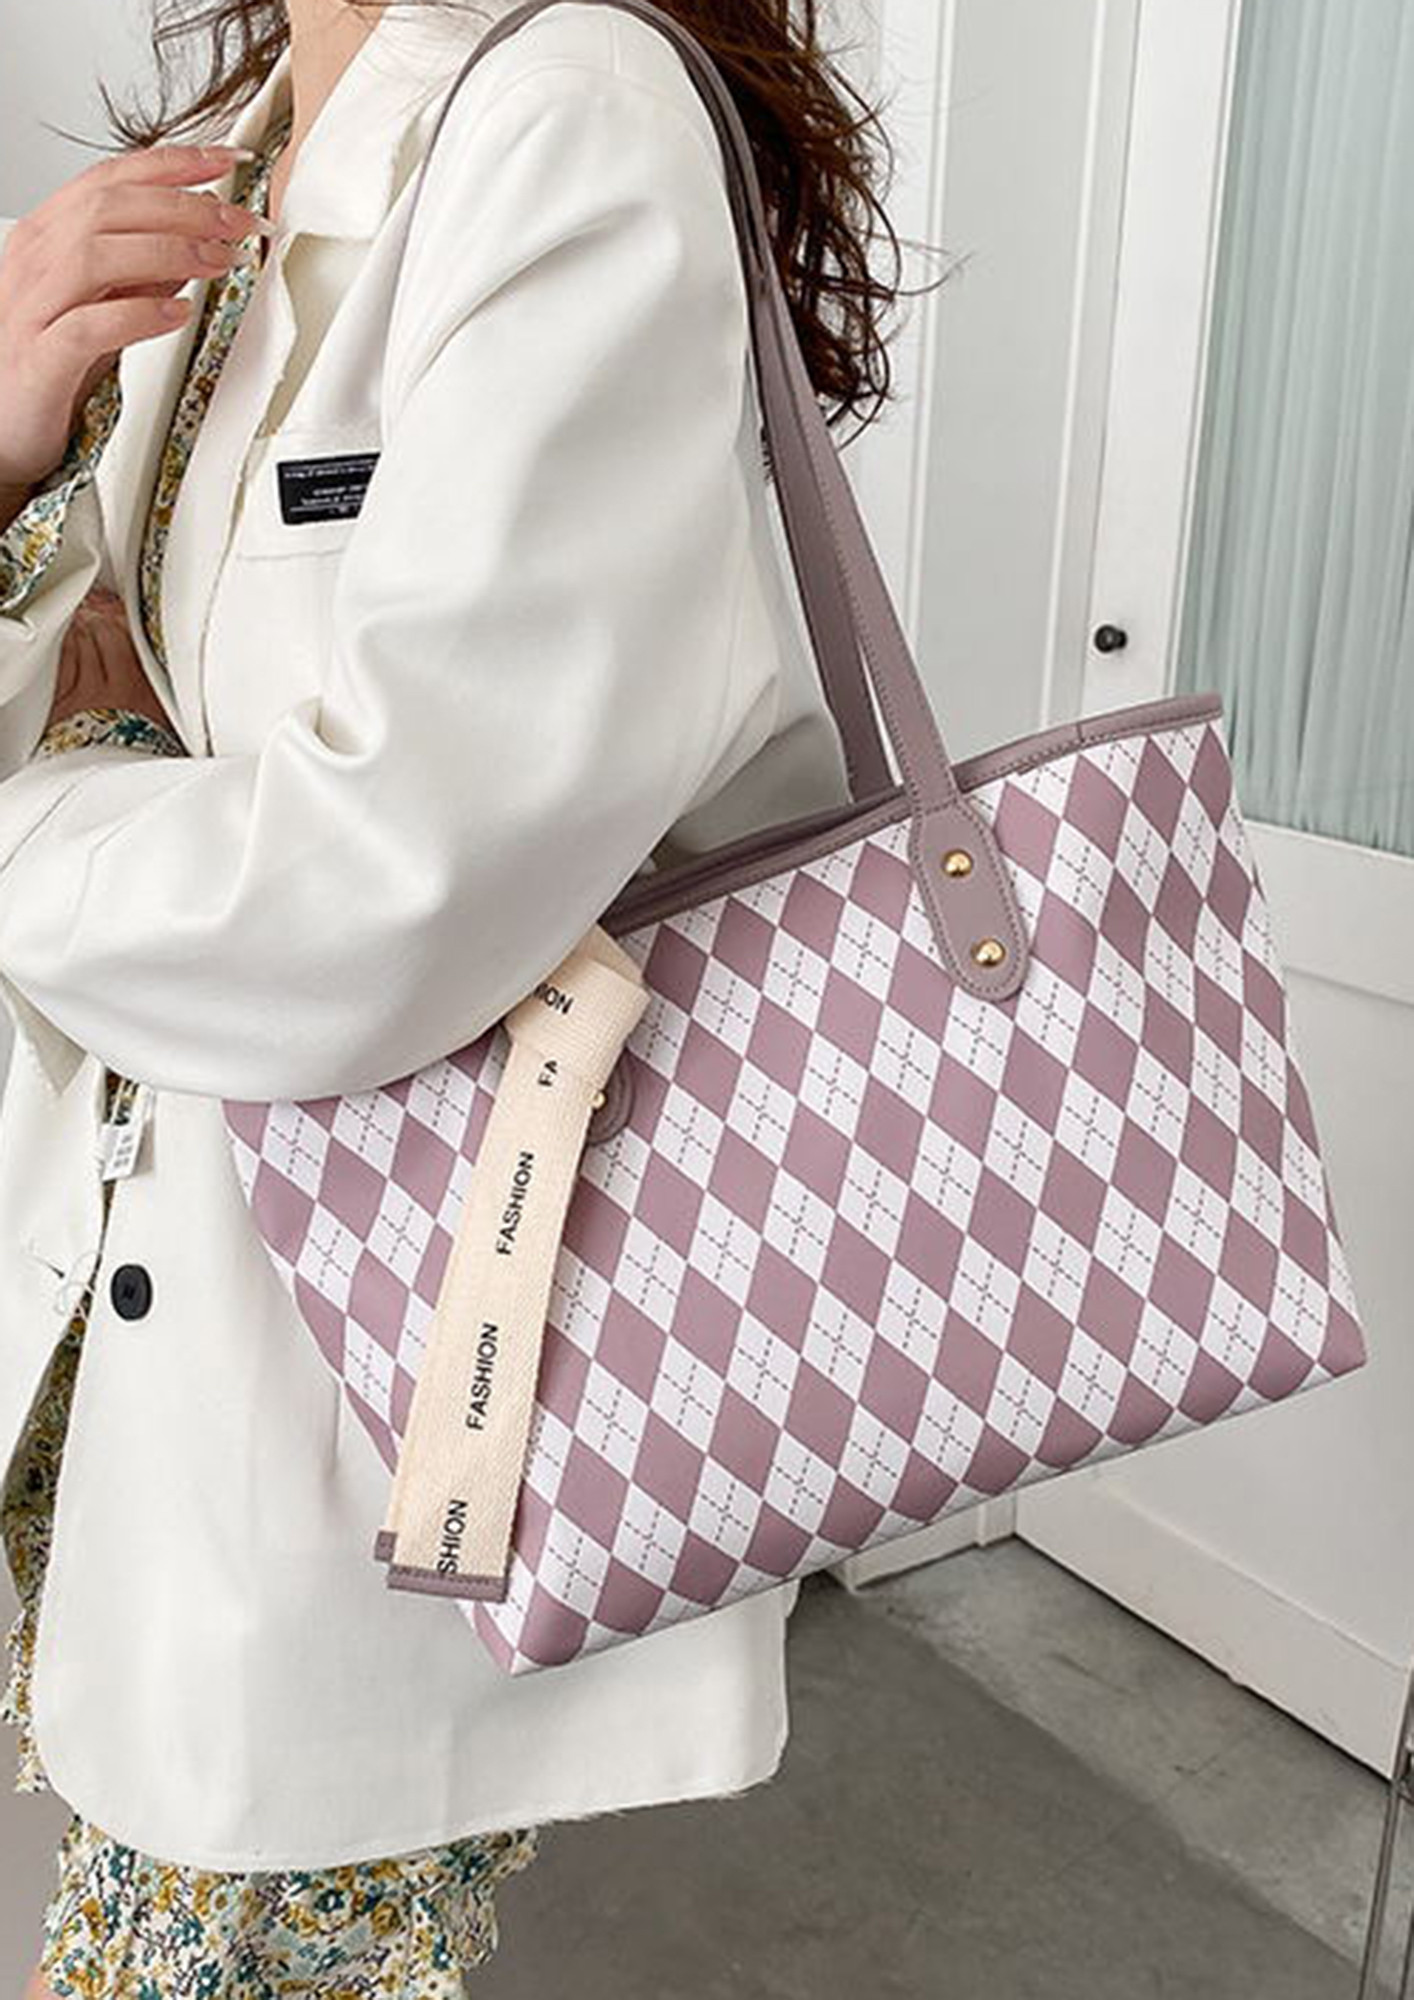 Guess Tote bags  Buy Guess Aviana Tote LatteCognac Handbags Online   Nykaa Fashion